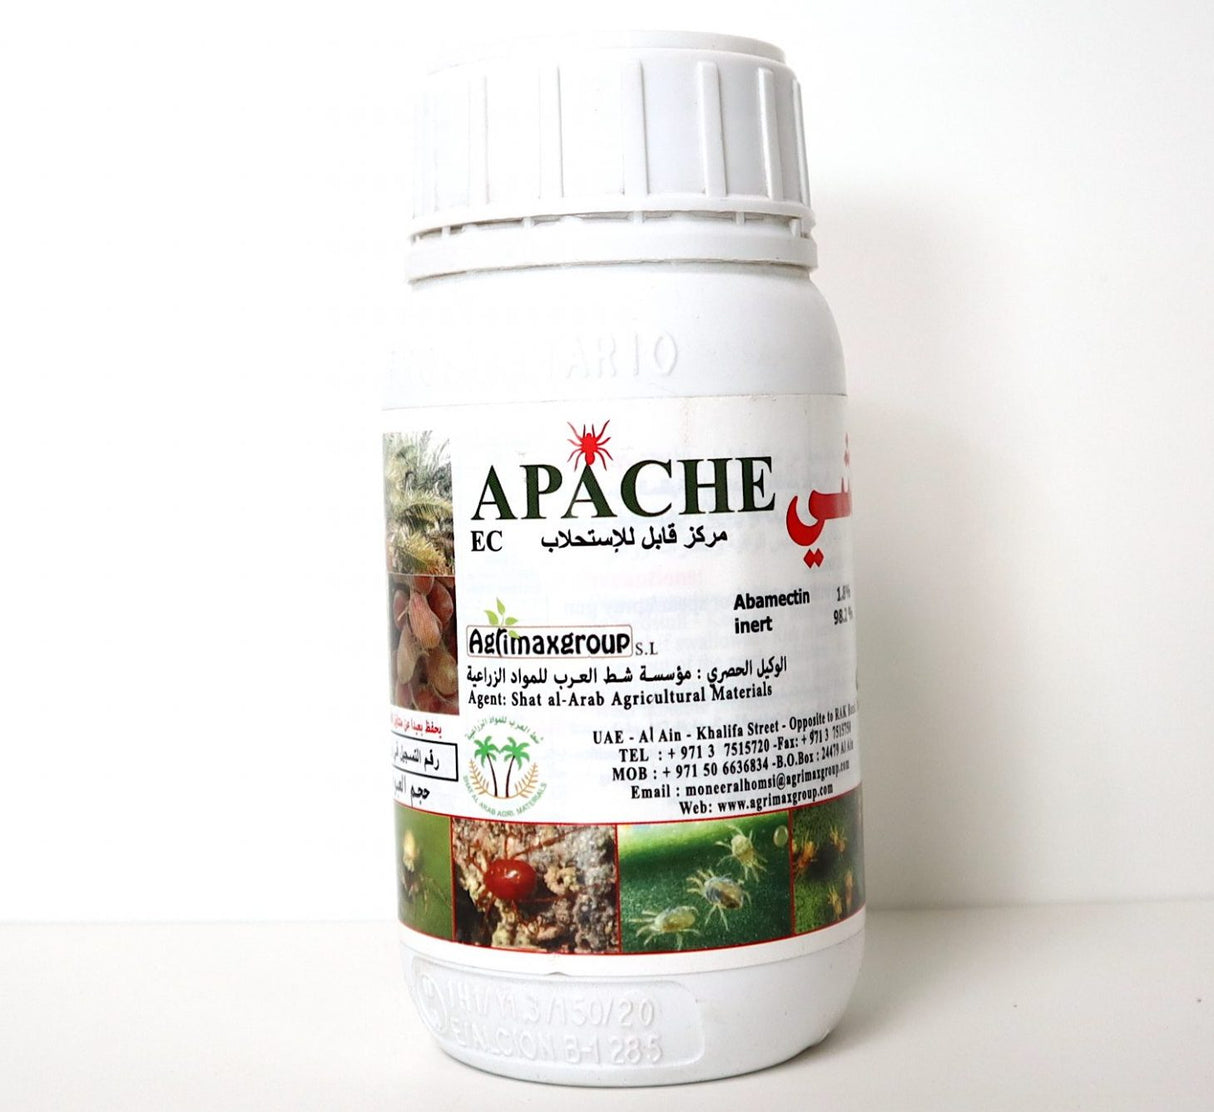 Apache 1.8% EC "Acaricide & Insecticide"